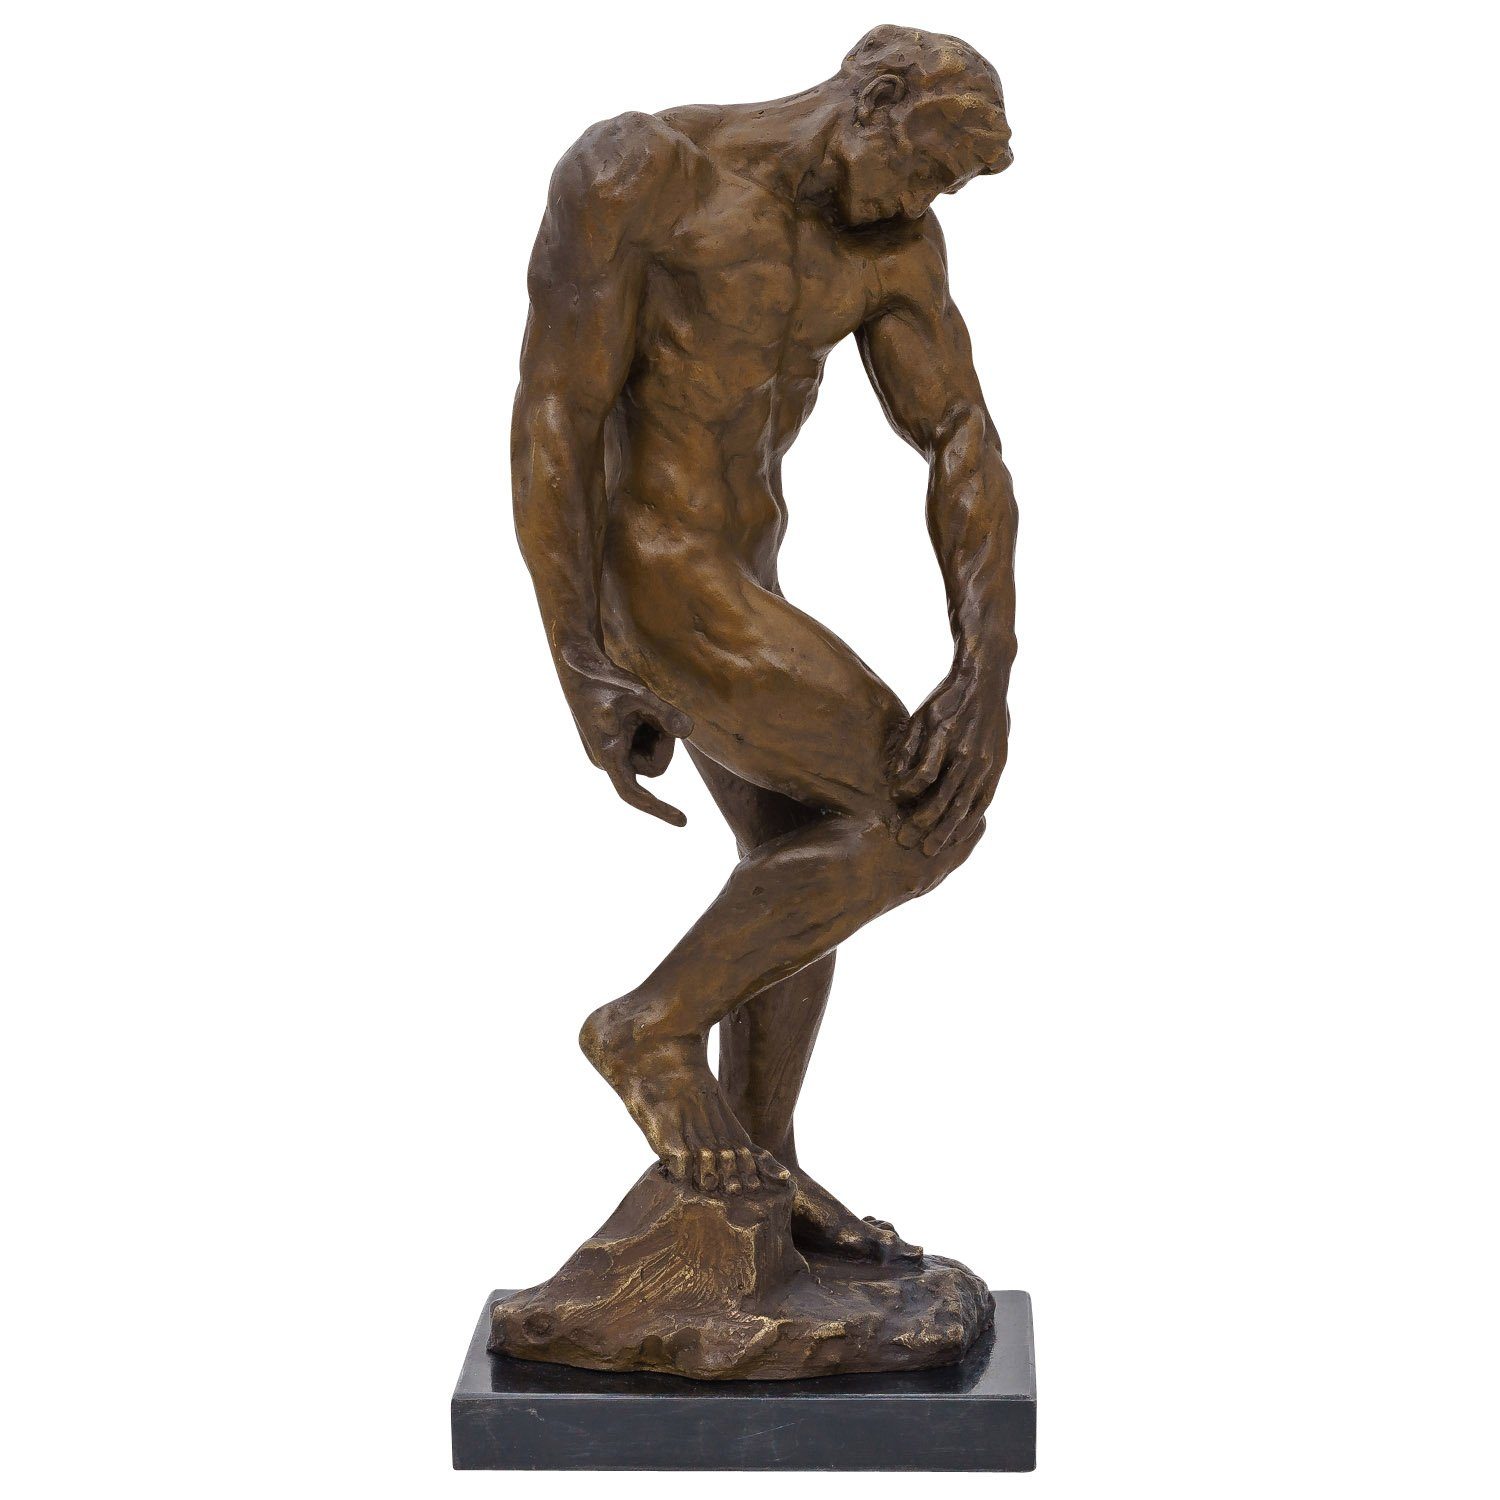 Aubaho Bronzeskulptur Stat Skulptur Rodin, Kopie, Bronze Figur Antik-Stil nach Adam im